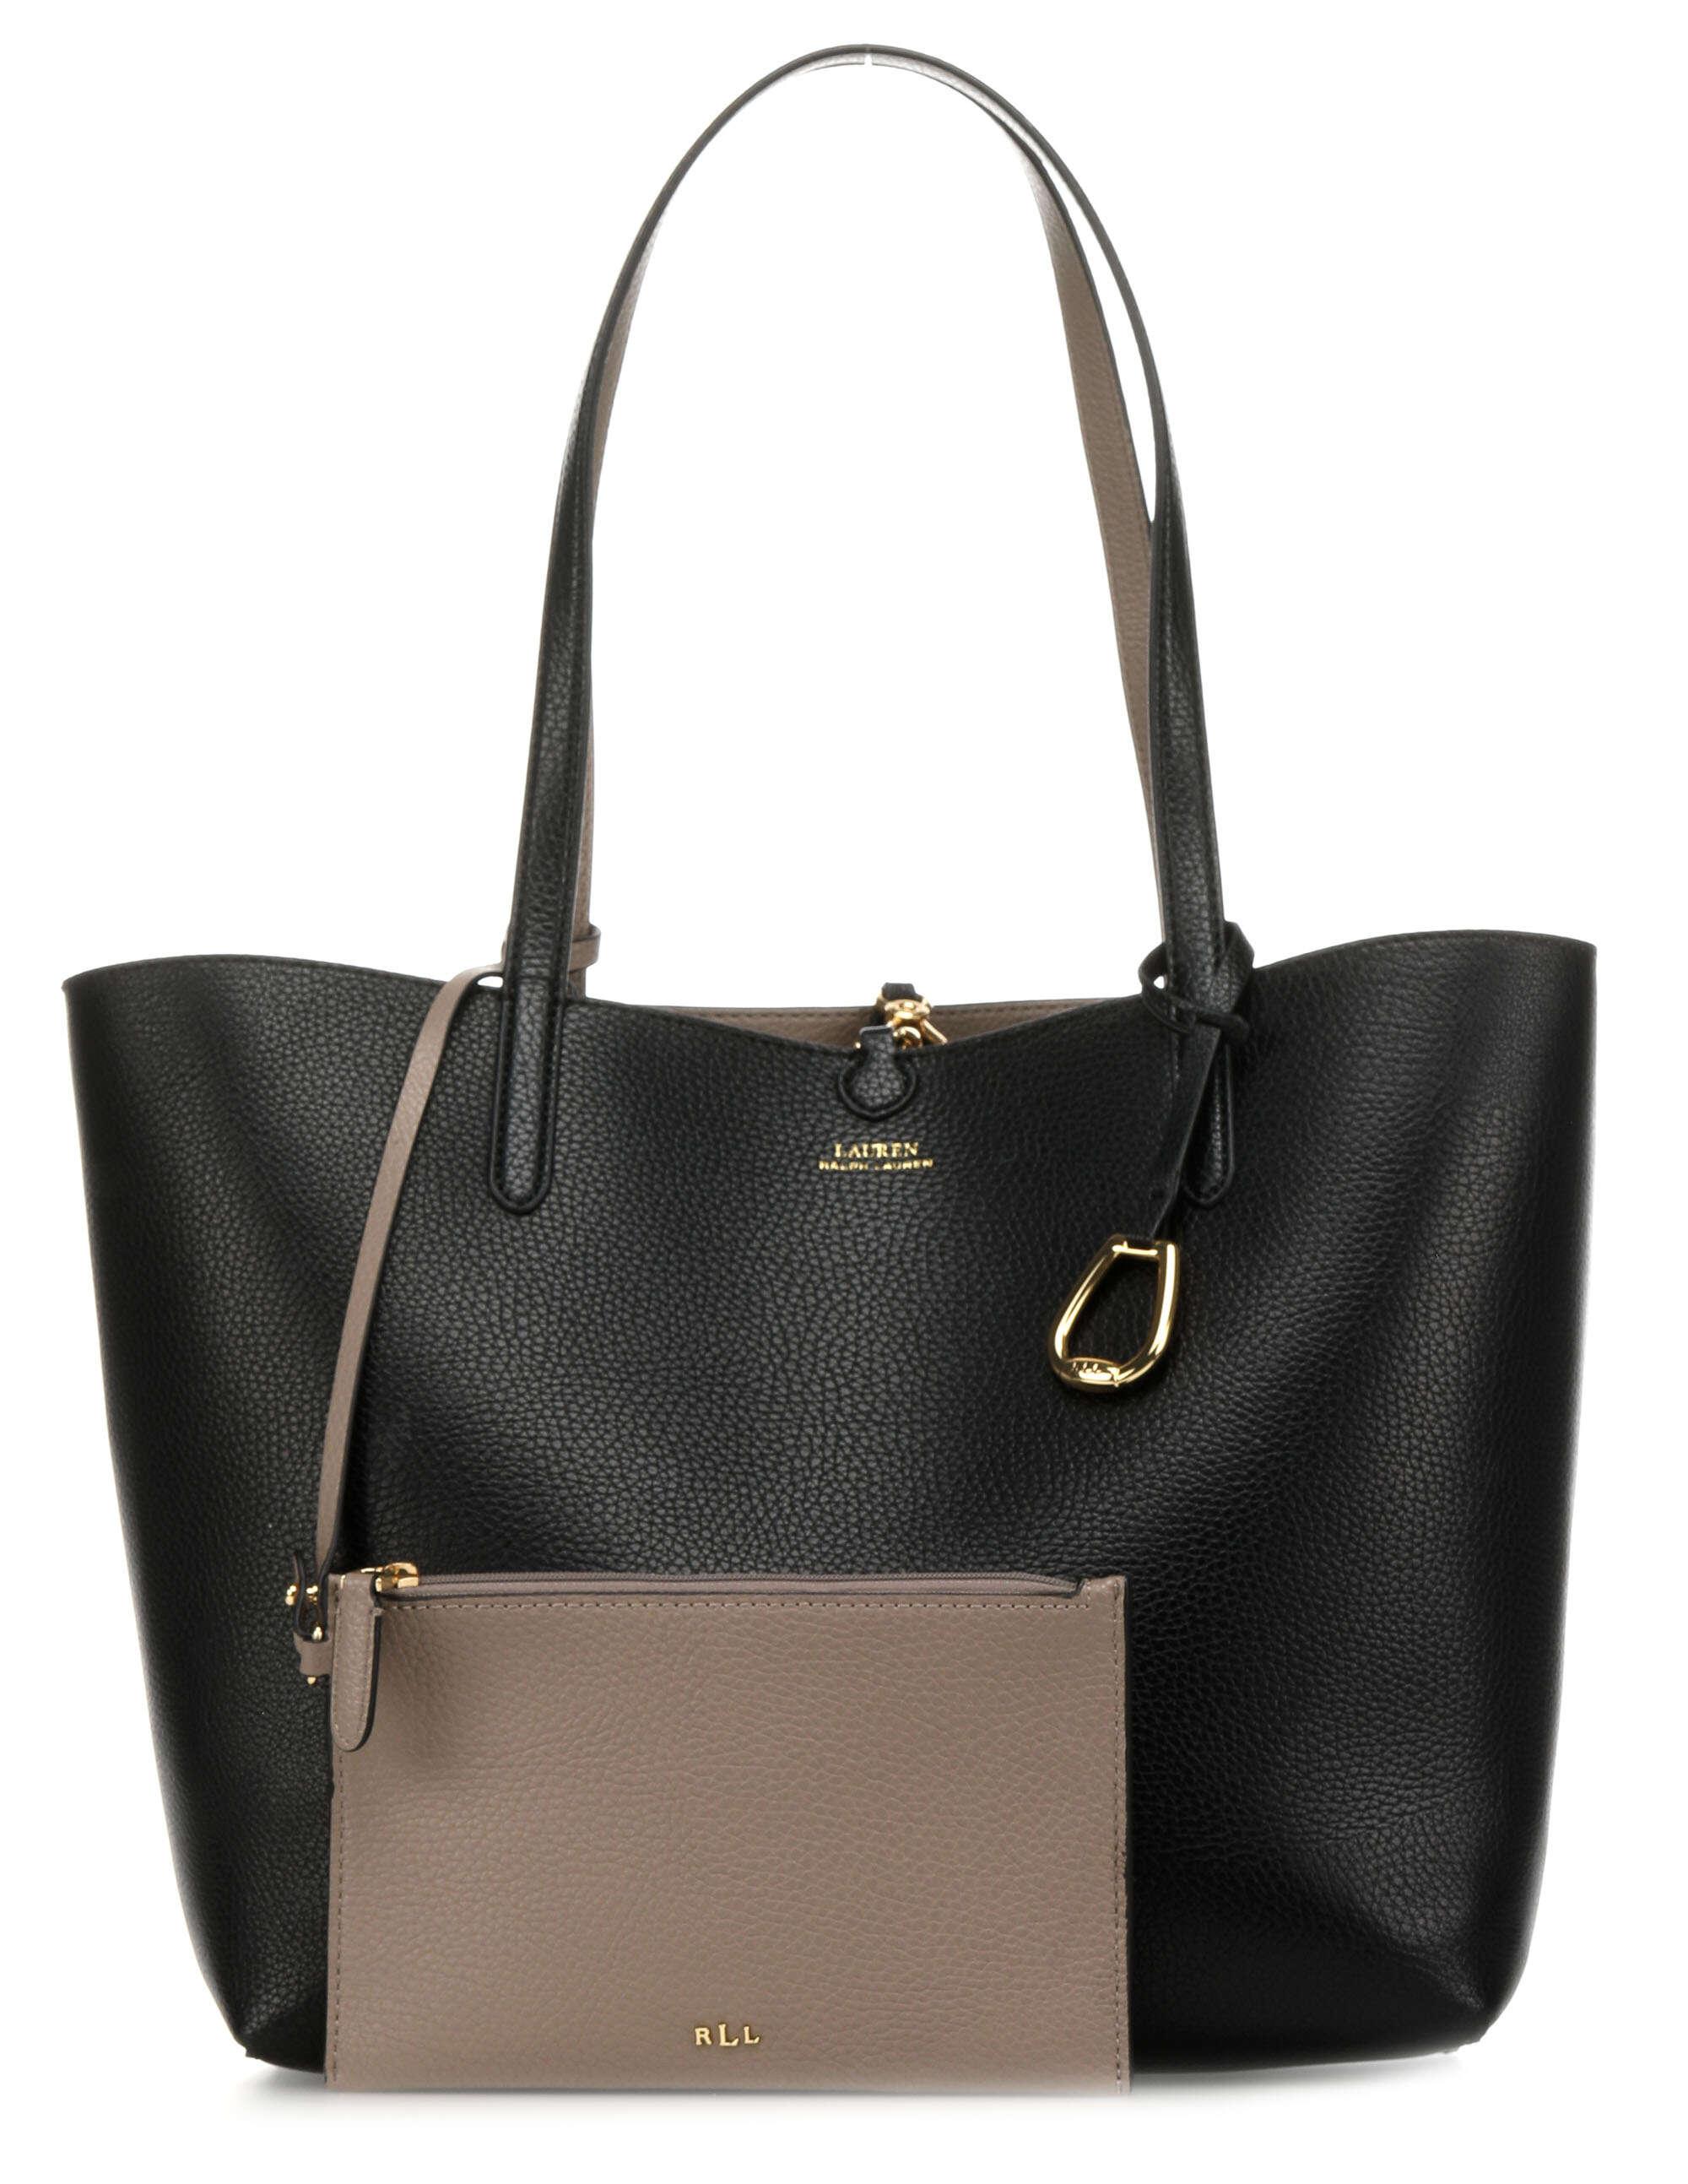 EUC Lauren Ralph Lauren RLL Brown Leather Vintage Style Hobo Purse Bag with  Fob | eBay